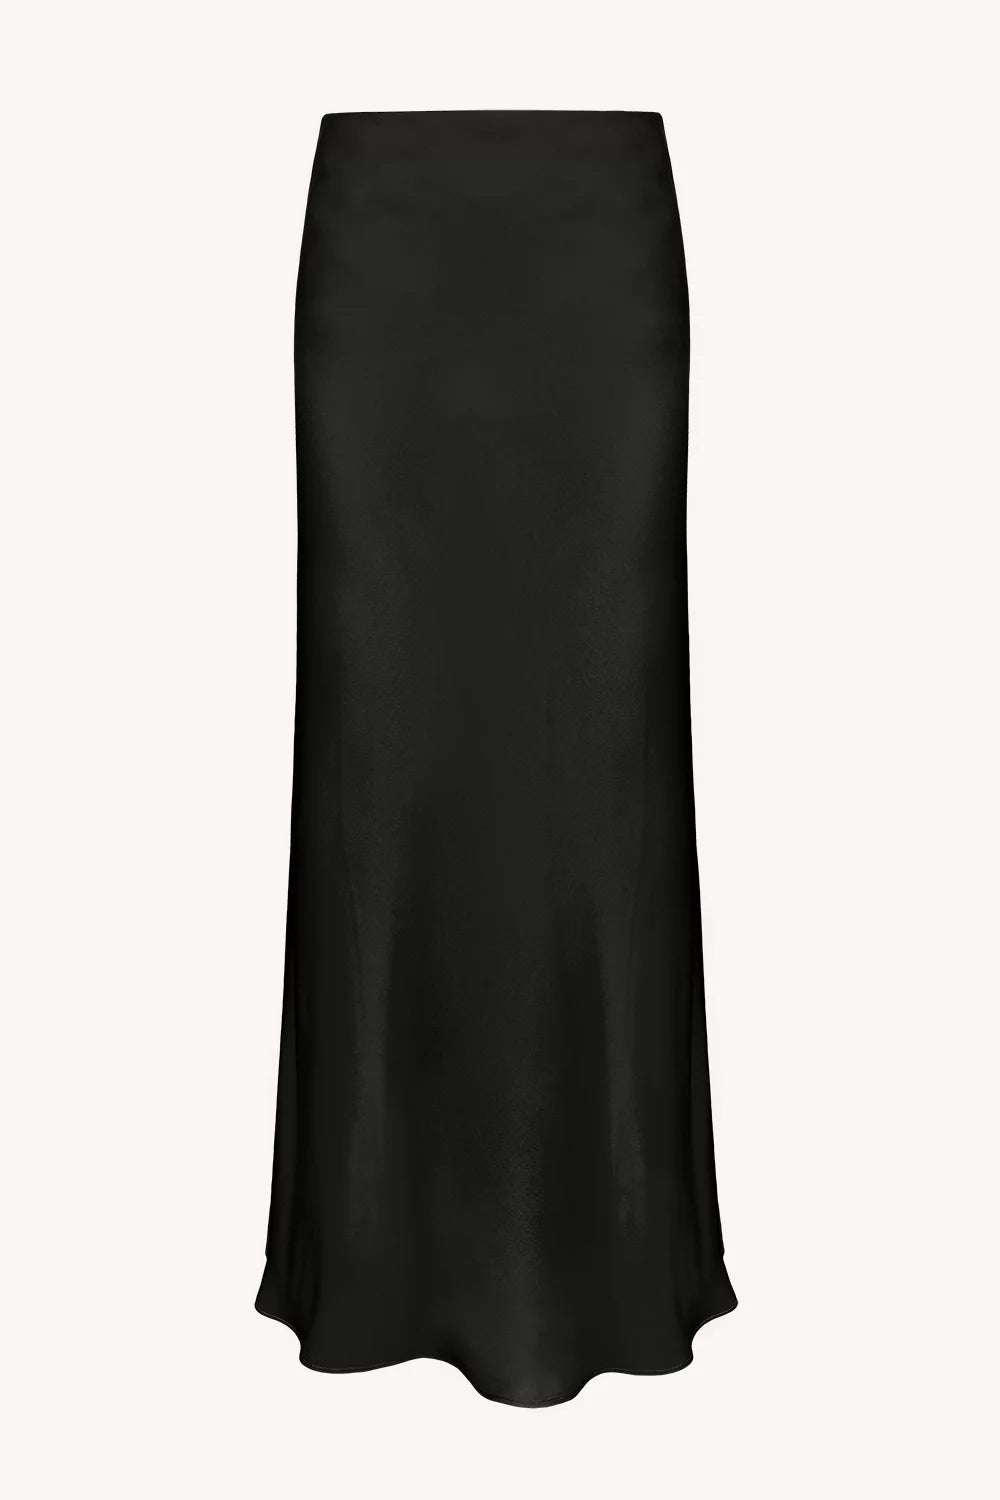 Roanne Maxi Black silk skirt